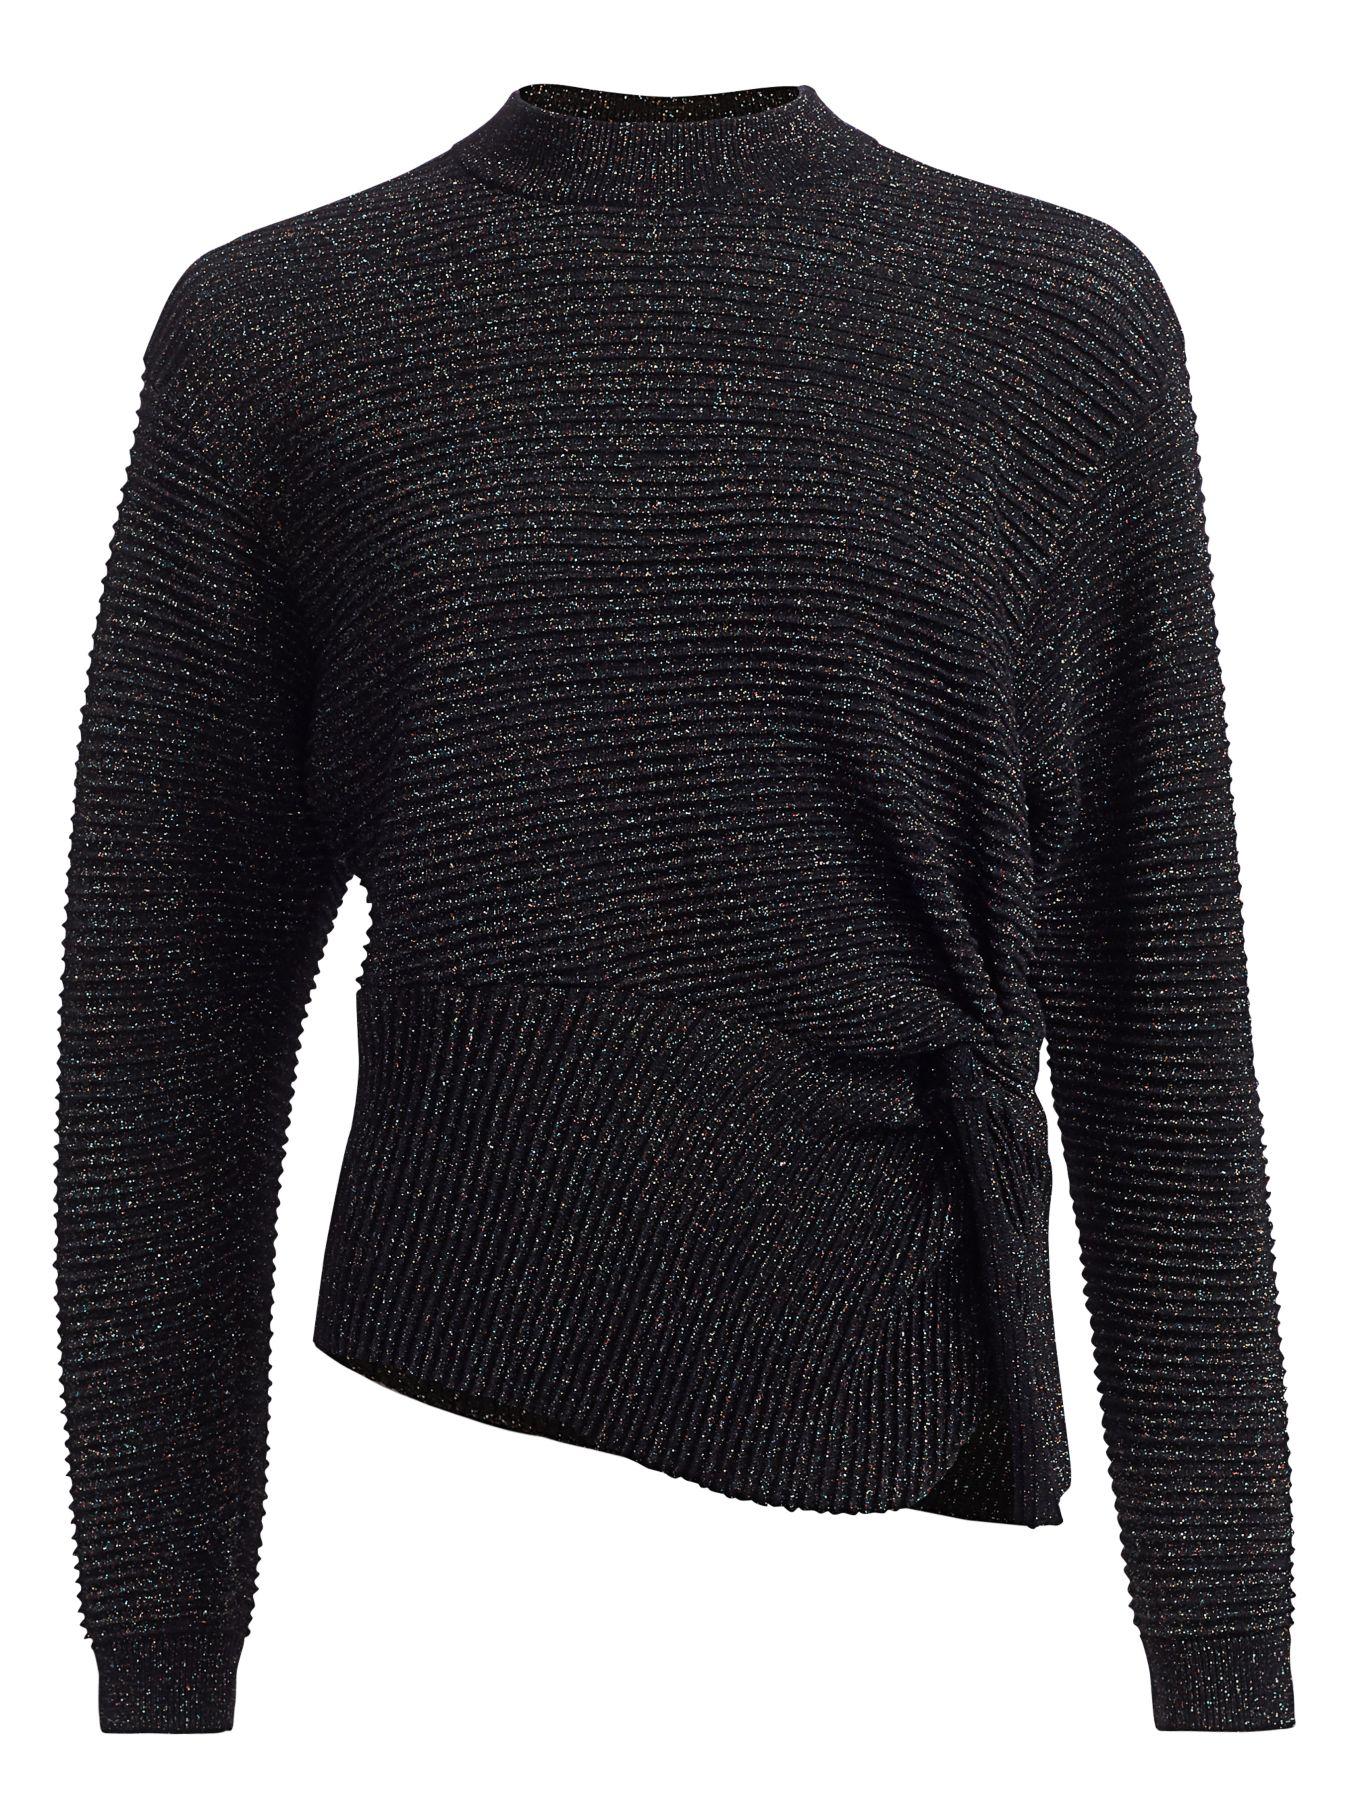 Michelle Mason Ribbed Metallic Wool Twist Sweater in Black - Lyst